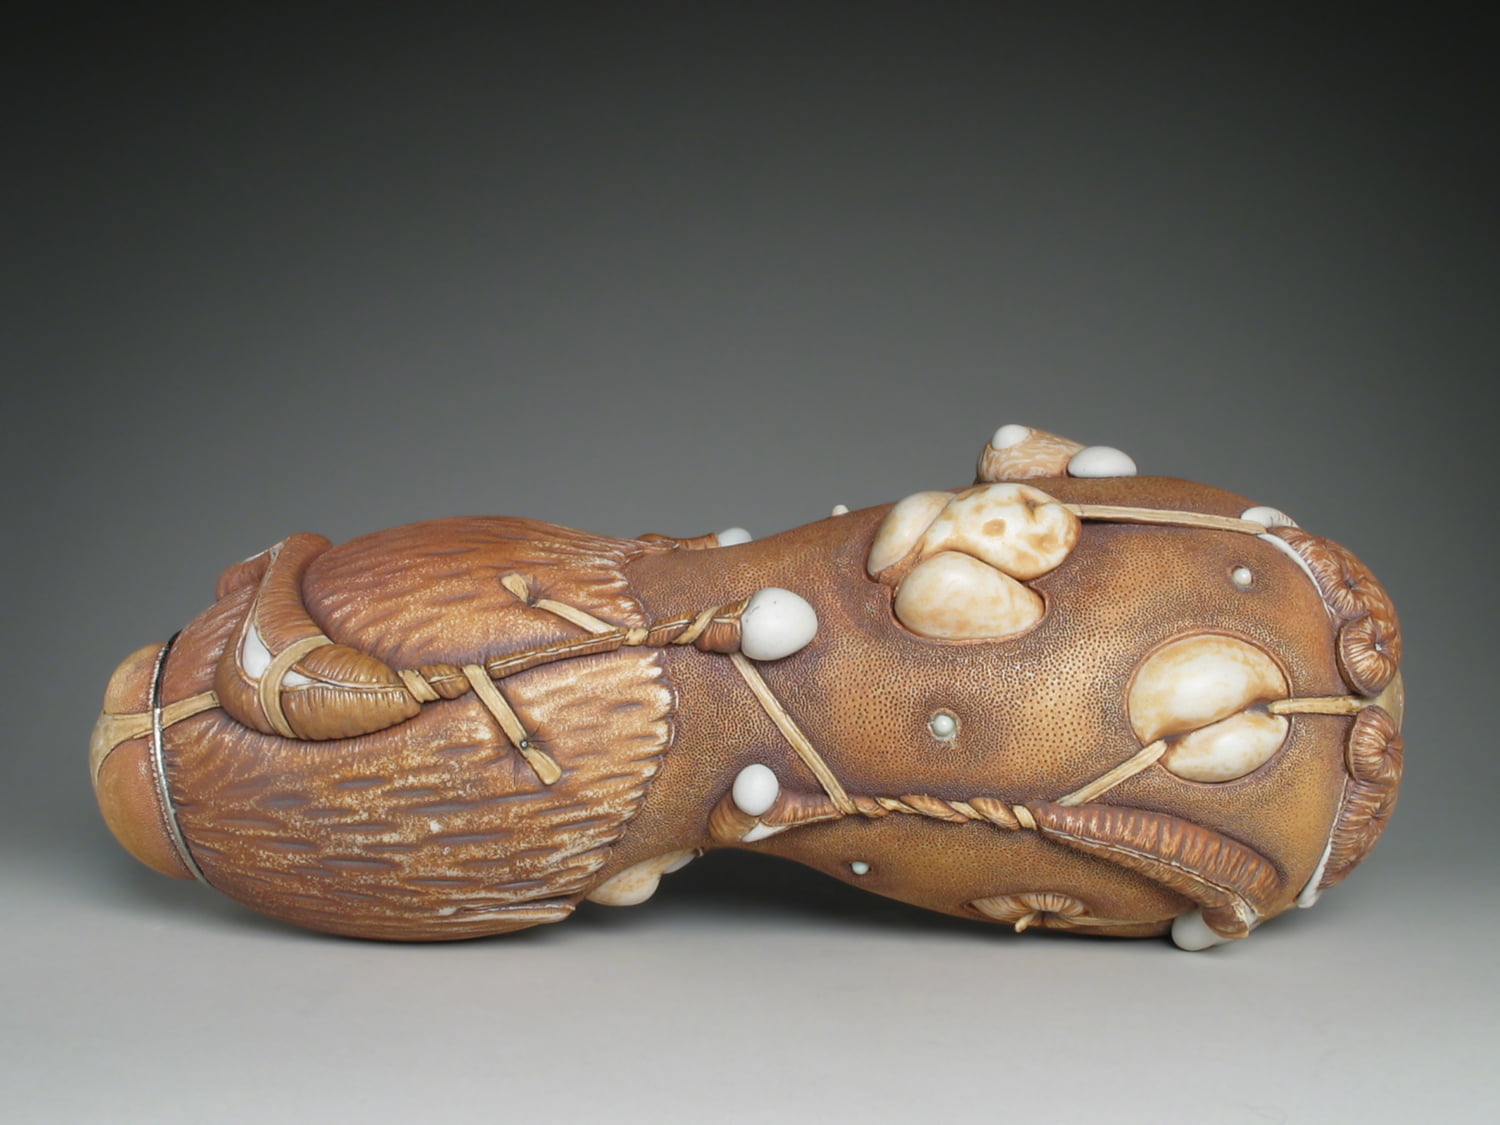 Jason Briggs "Lover". Porcelain, hair, and mixed media. Sculptural ceramic art object.